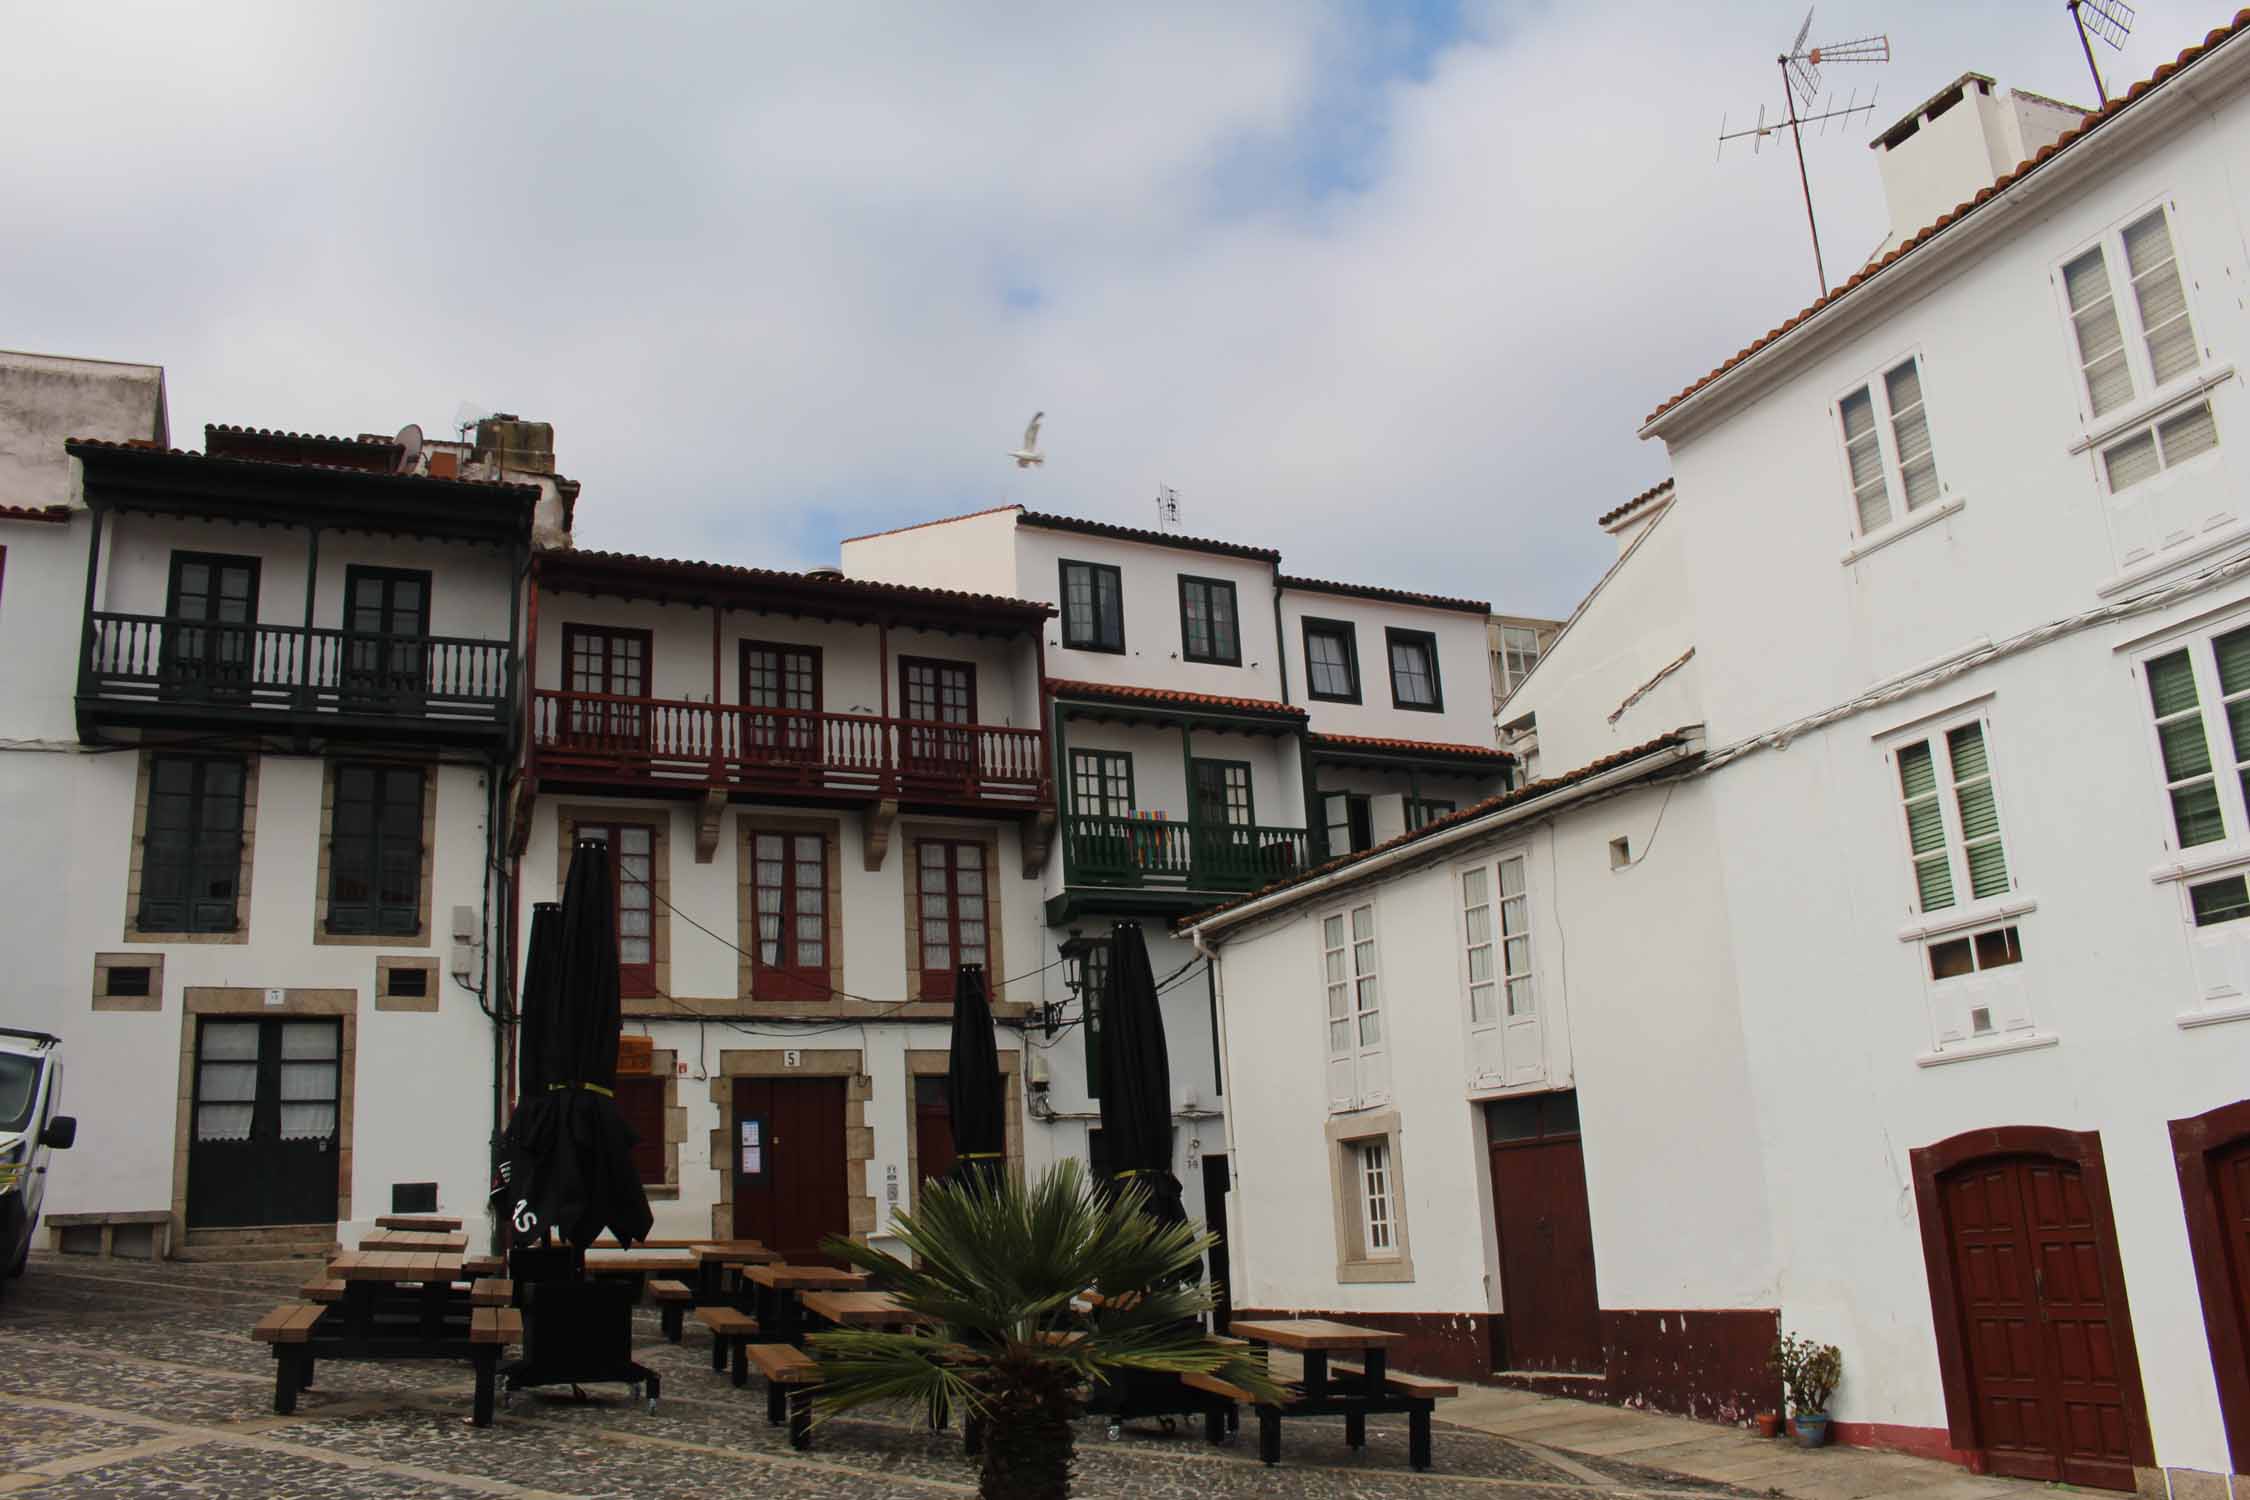 Betanzos, maisons typiques, balcons